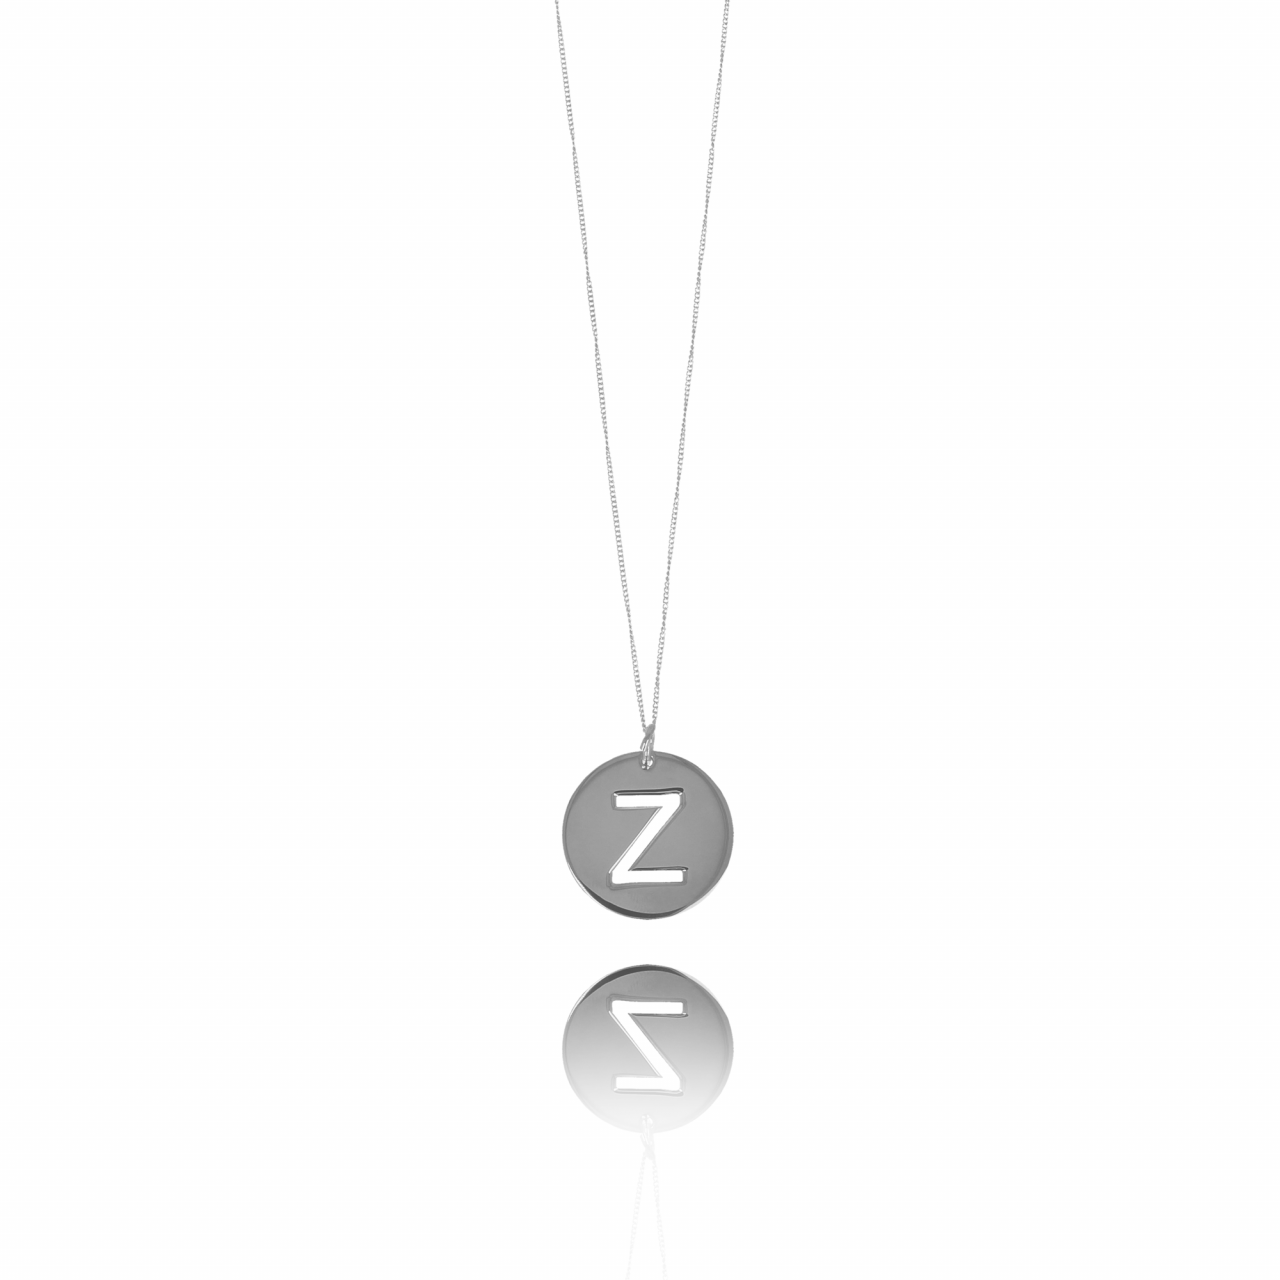 Silver initial Pendant Gourmet necklacelott-theme.productDescriptionPage.SEO.byTheBrand